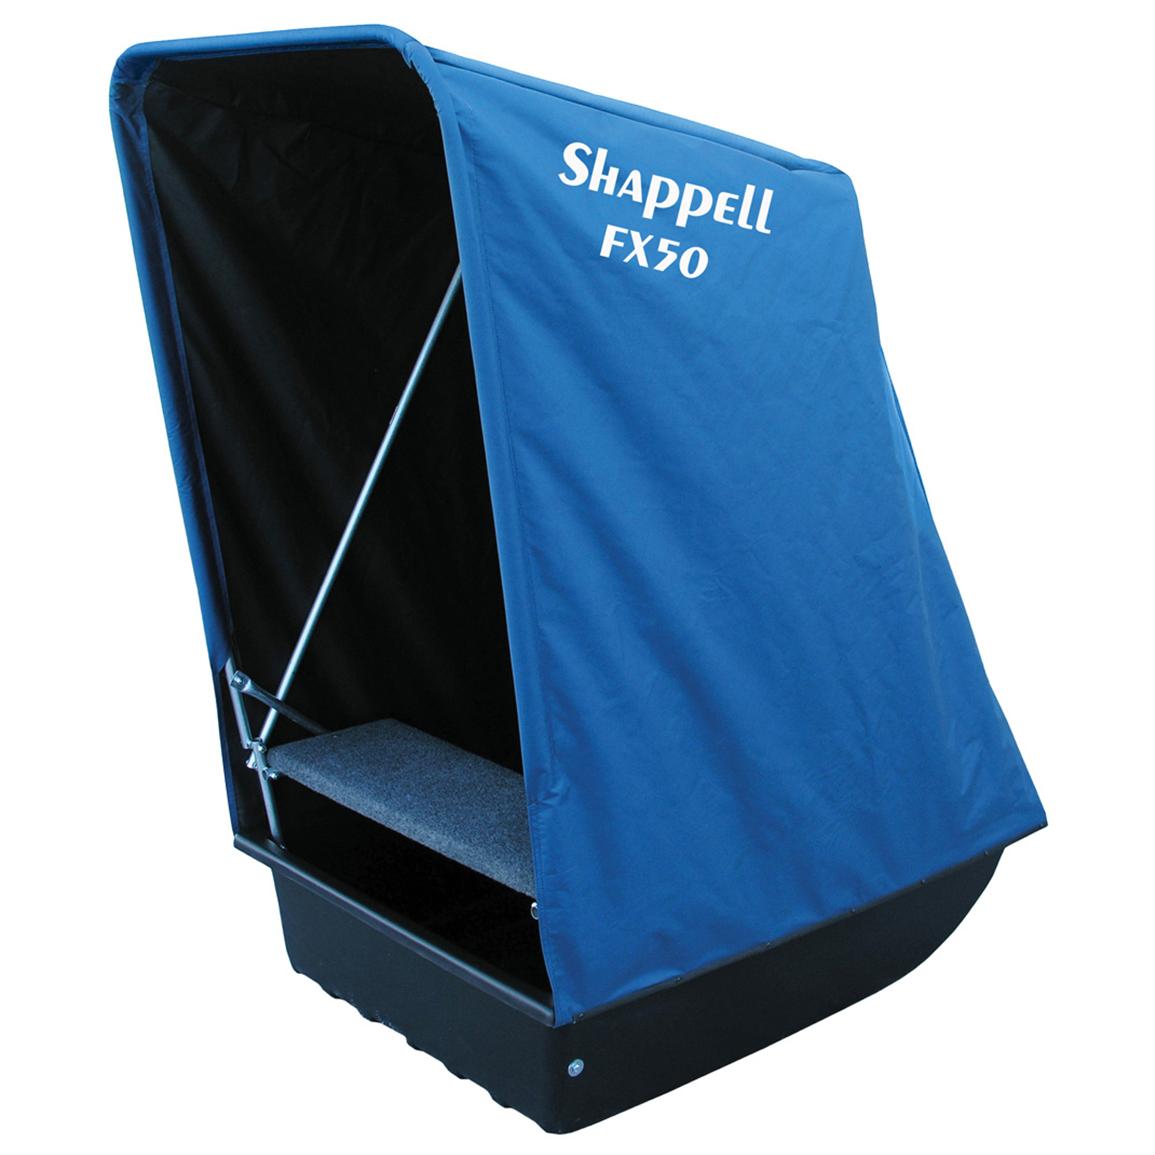 Shappell FX50 Windbreak Ice Fishing Shelter